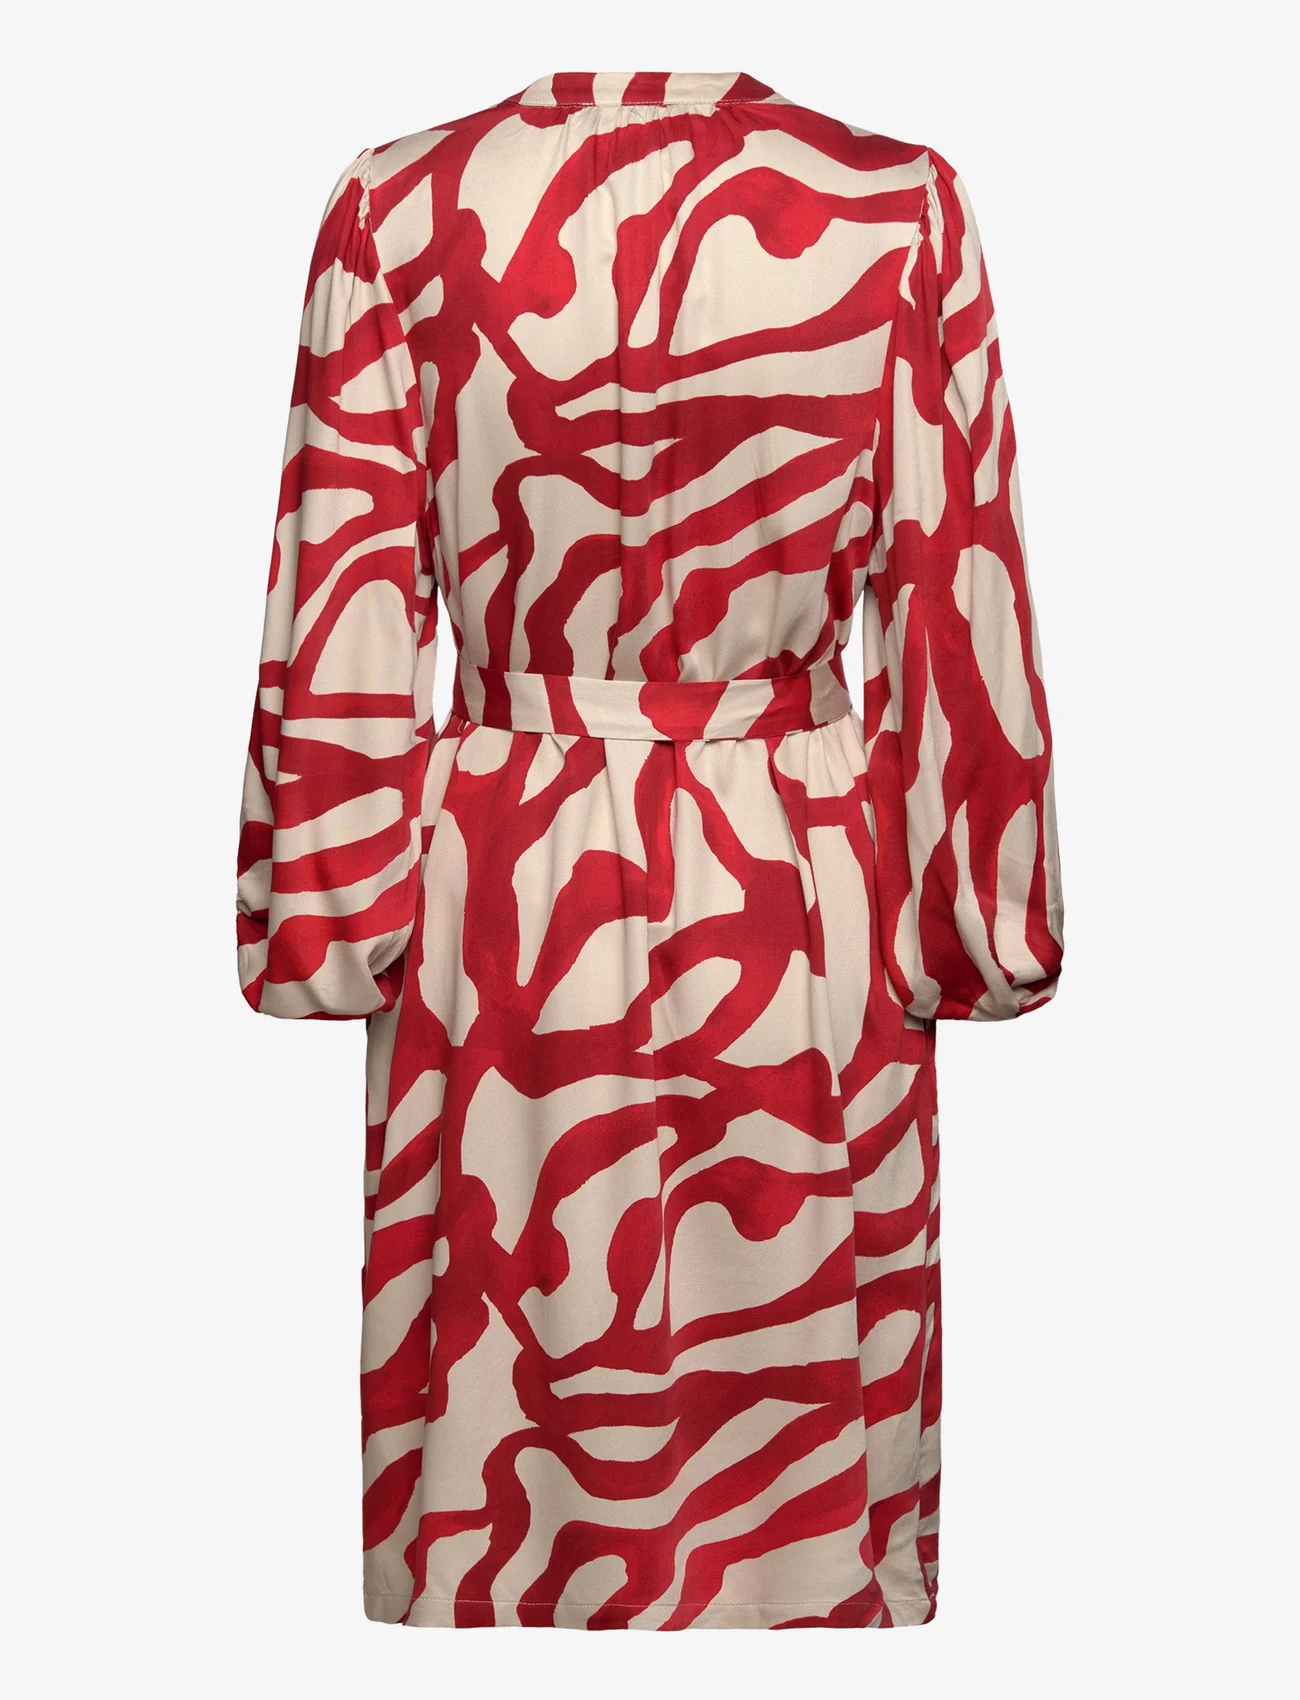 Minus - MSJassie Short Dress - sukienki krótkie - barn red print - 1